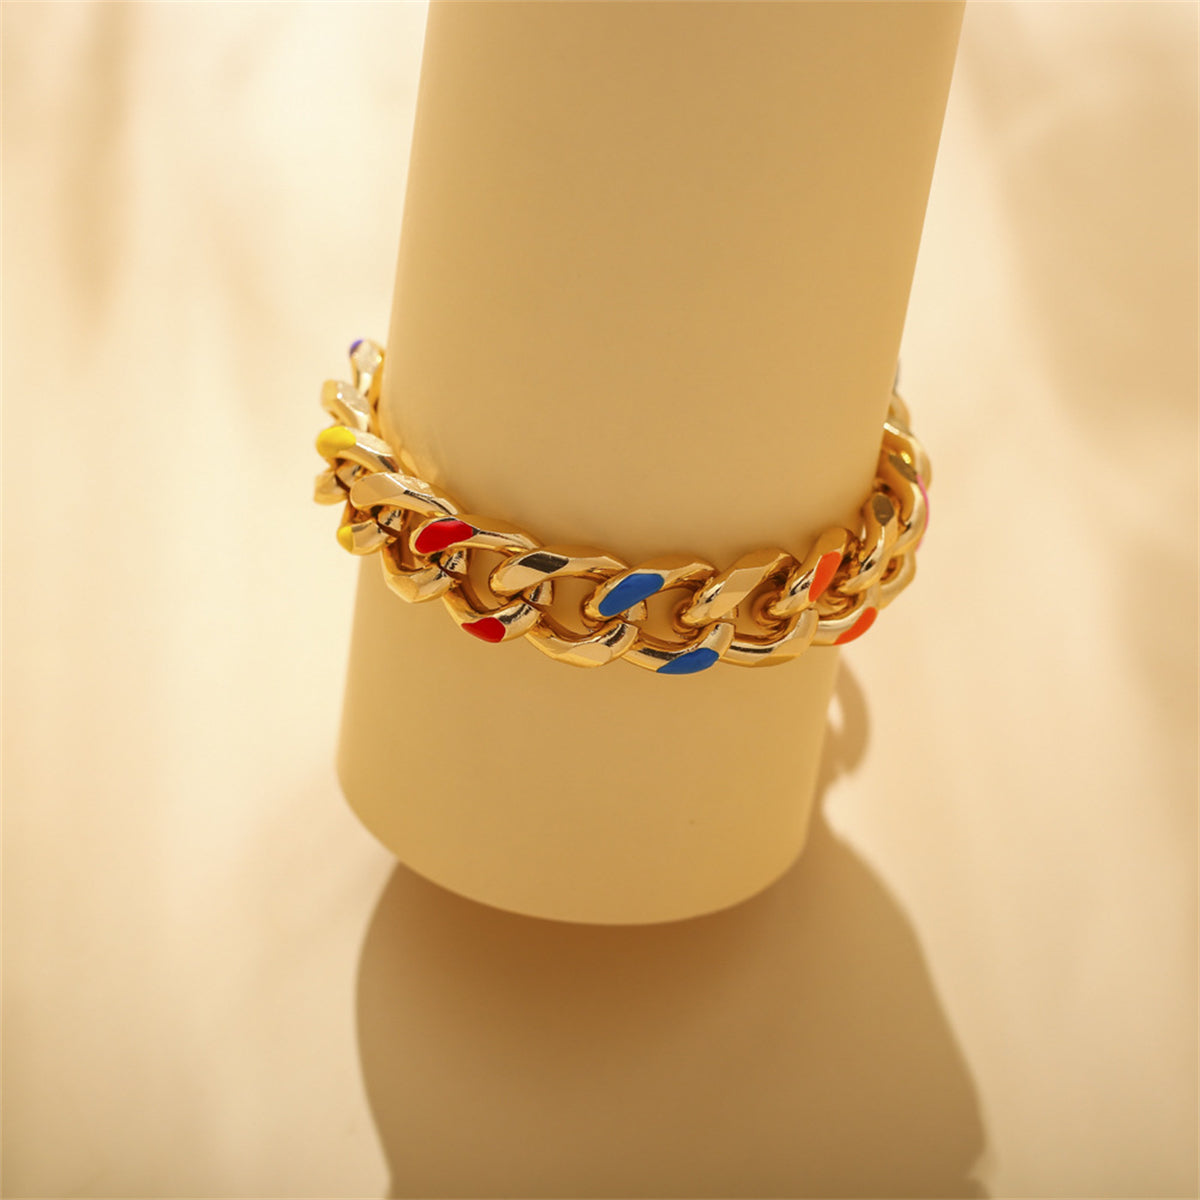 Pink Enamel & 18K Gold-Plated Curb Chain Bracelet